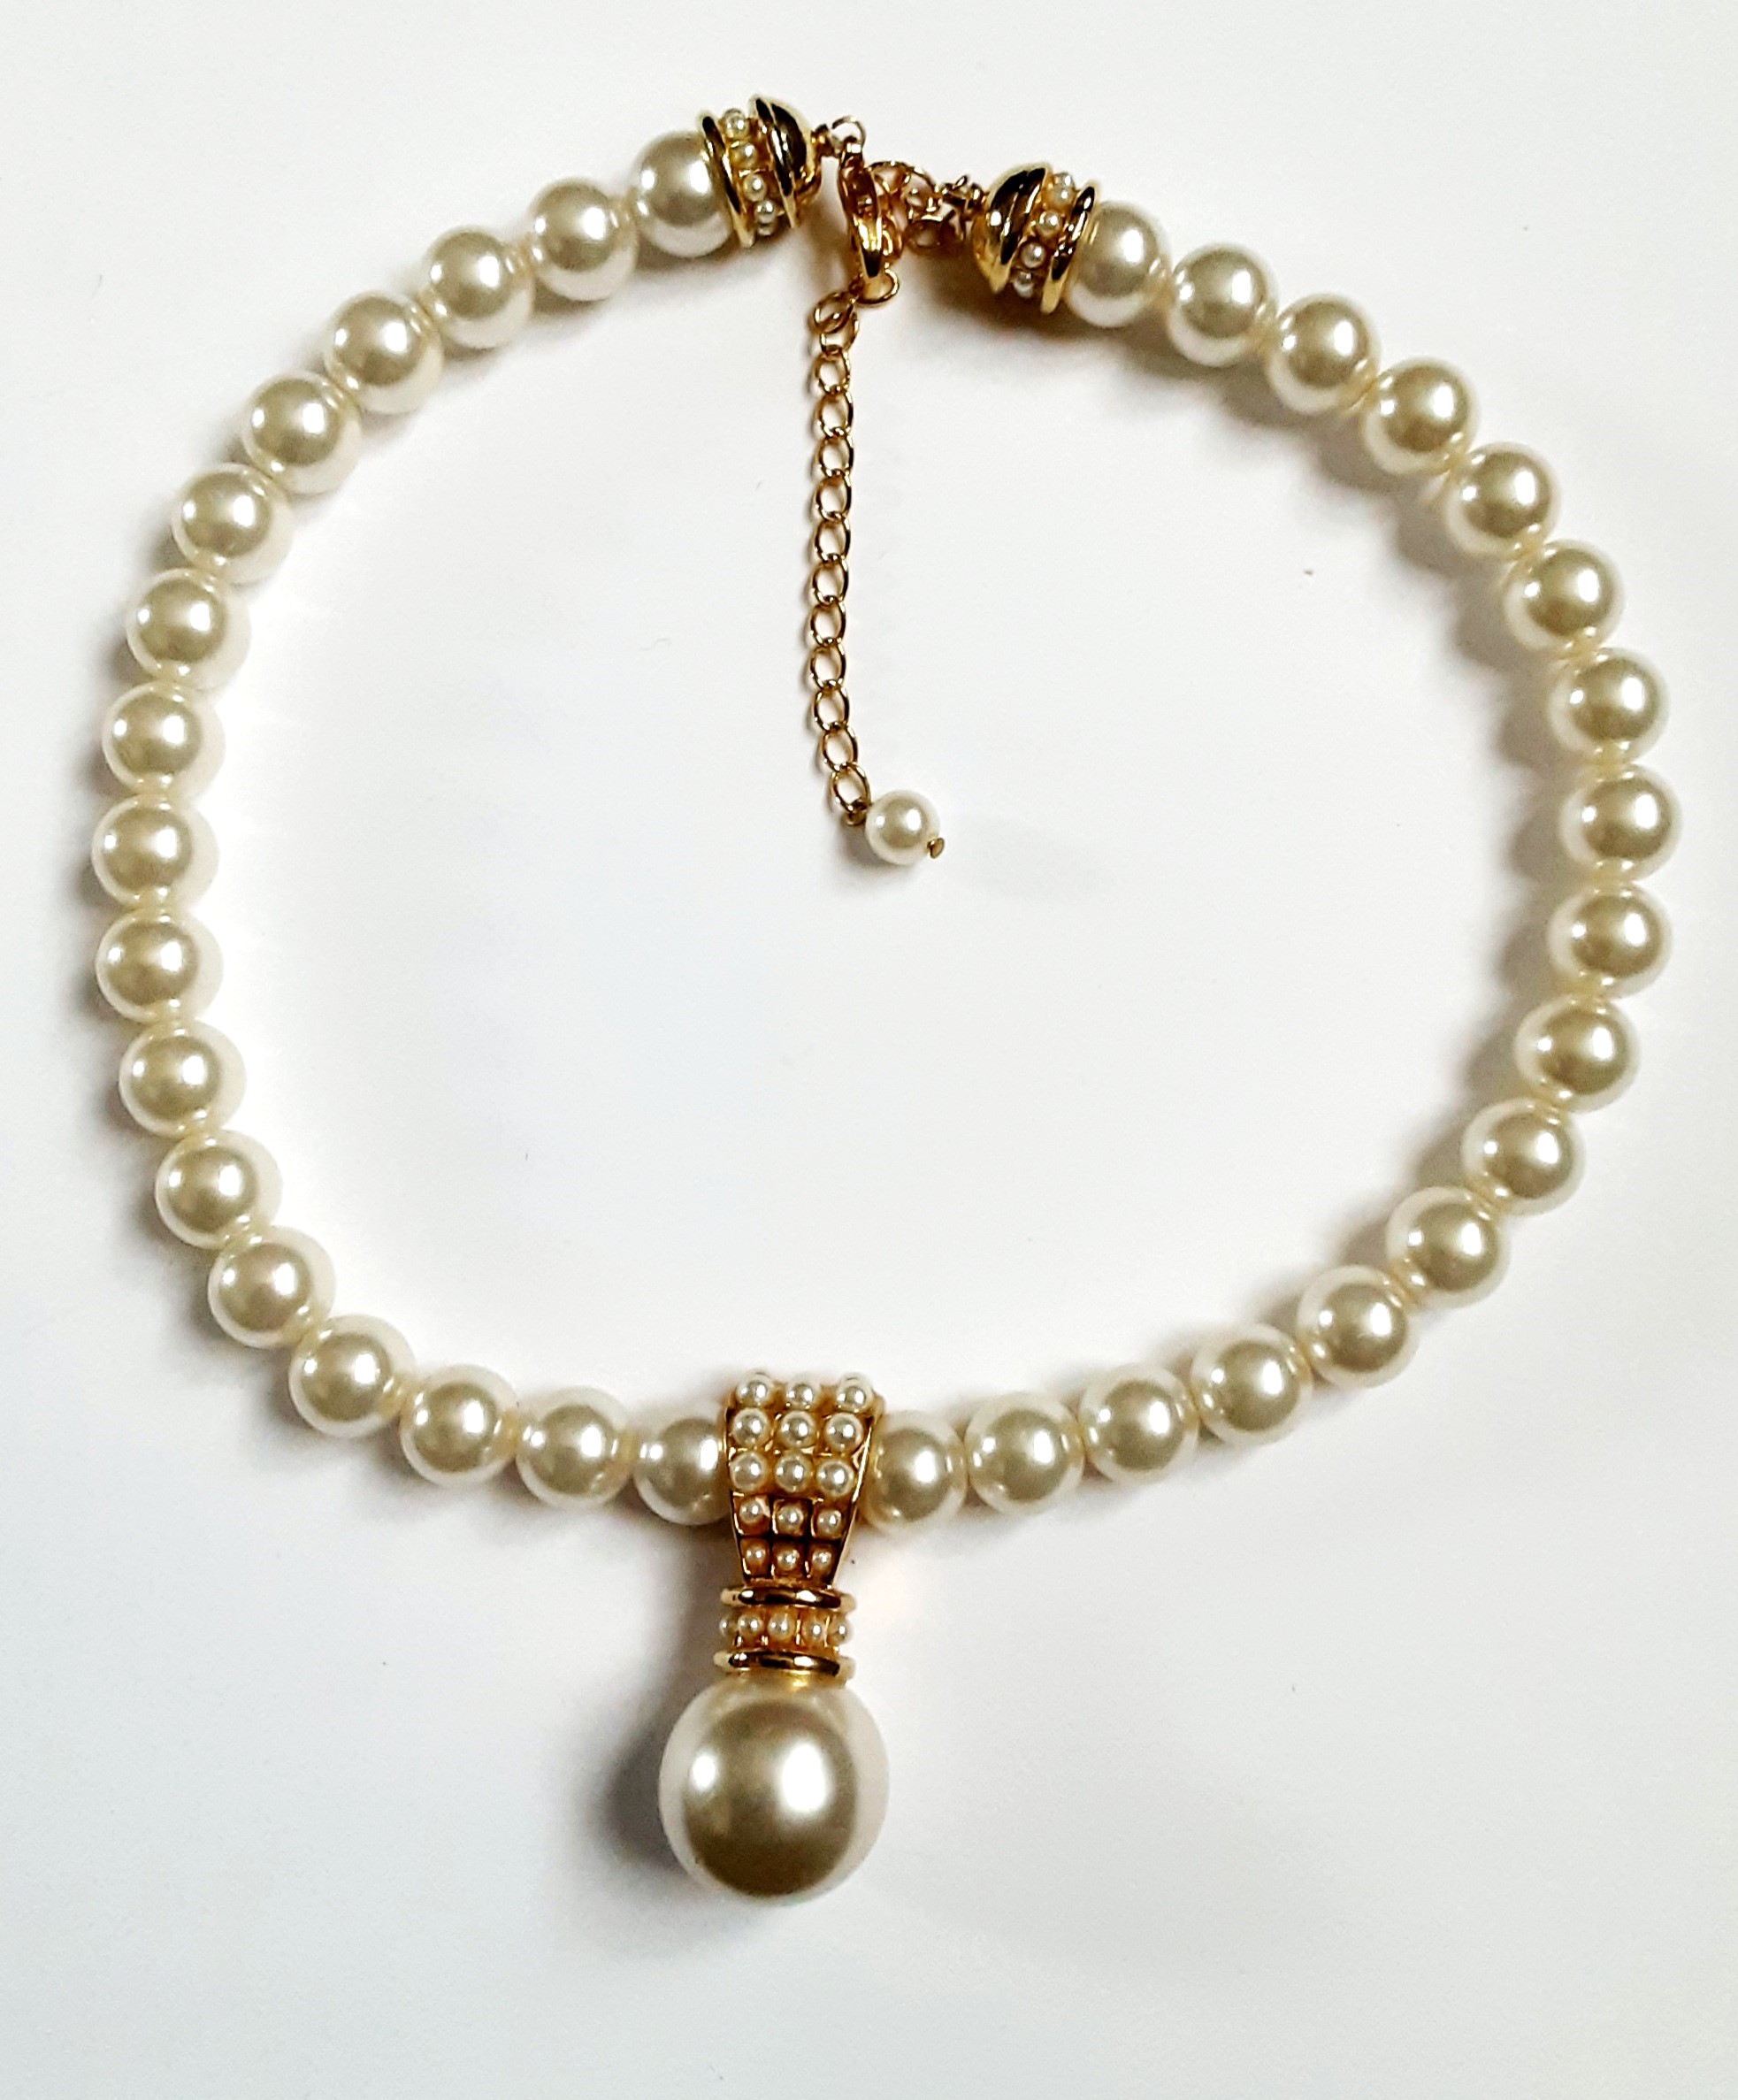 pearls collar vintage necklace with drop